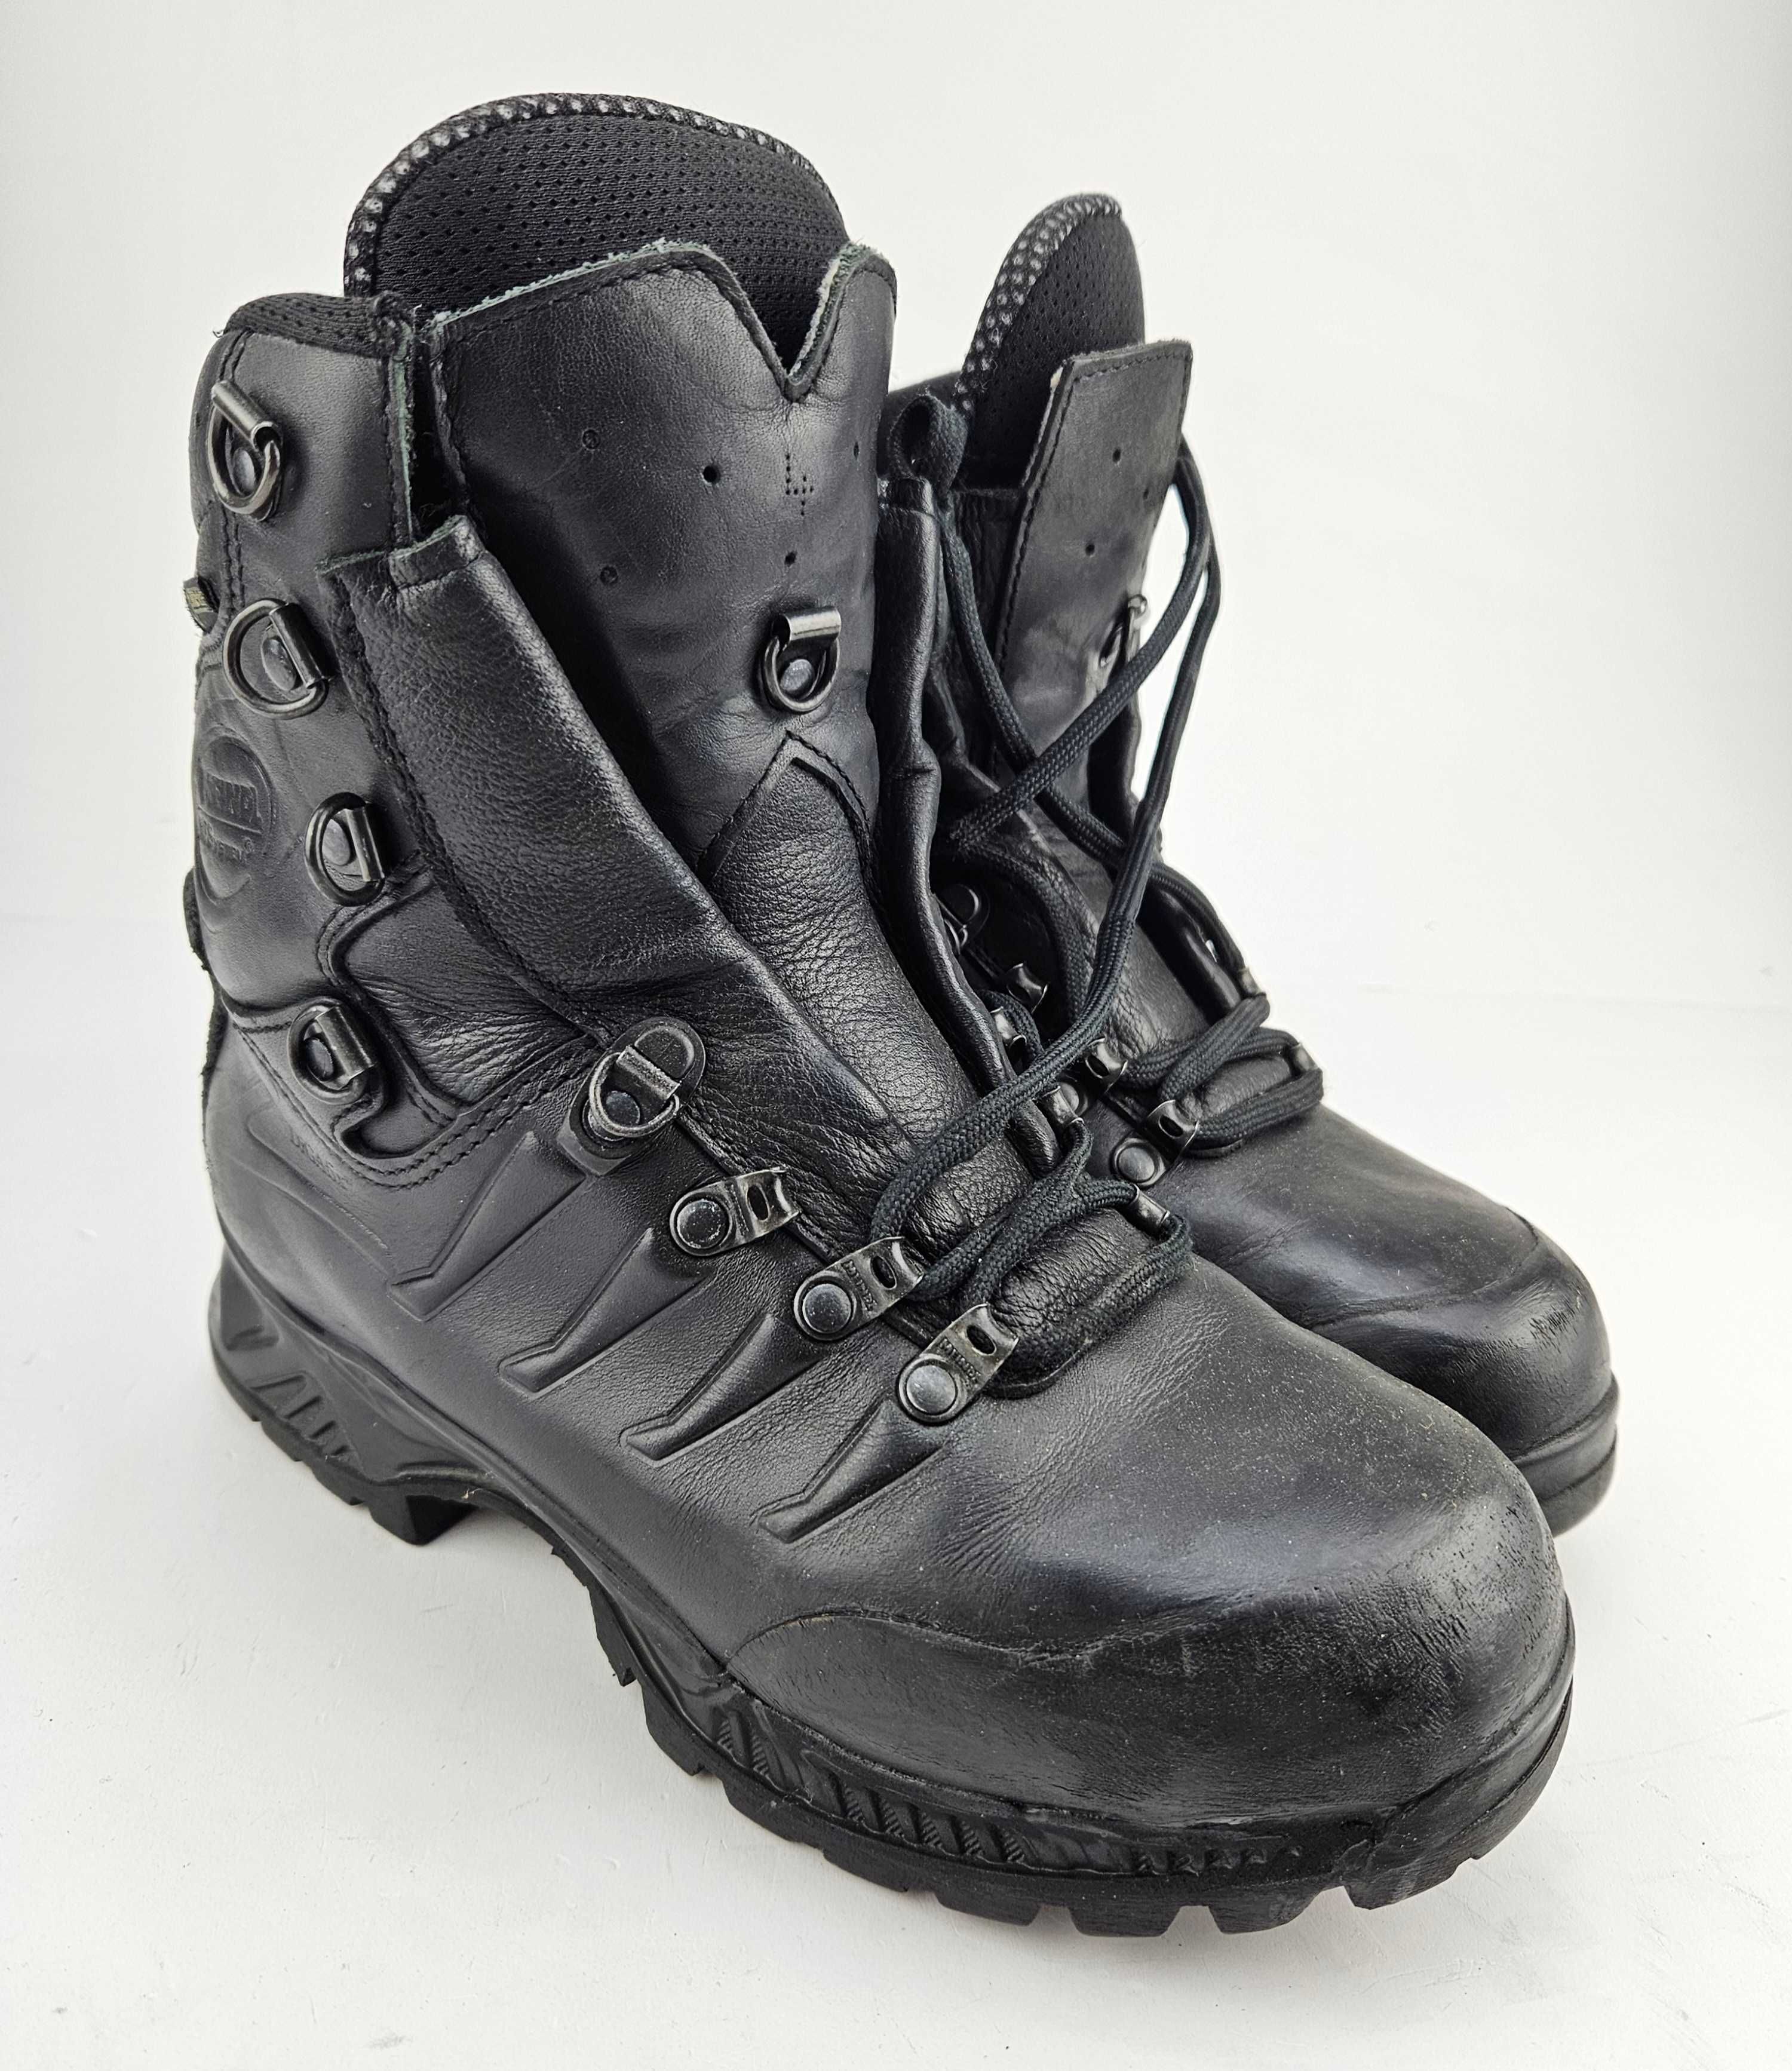 Buty wojskowe Meindl Combat Extreme r. 37